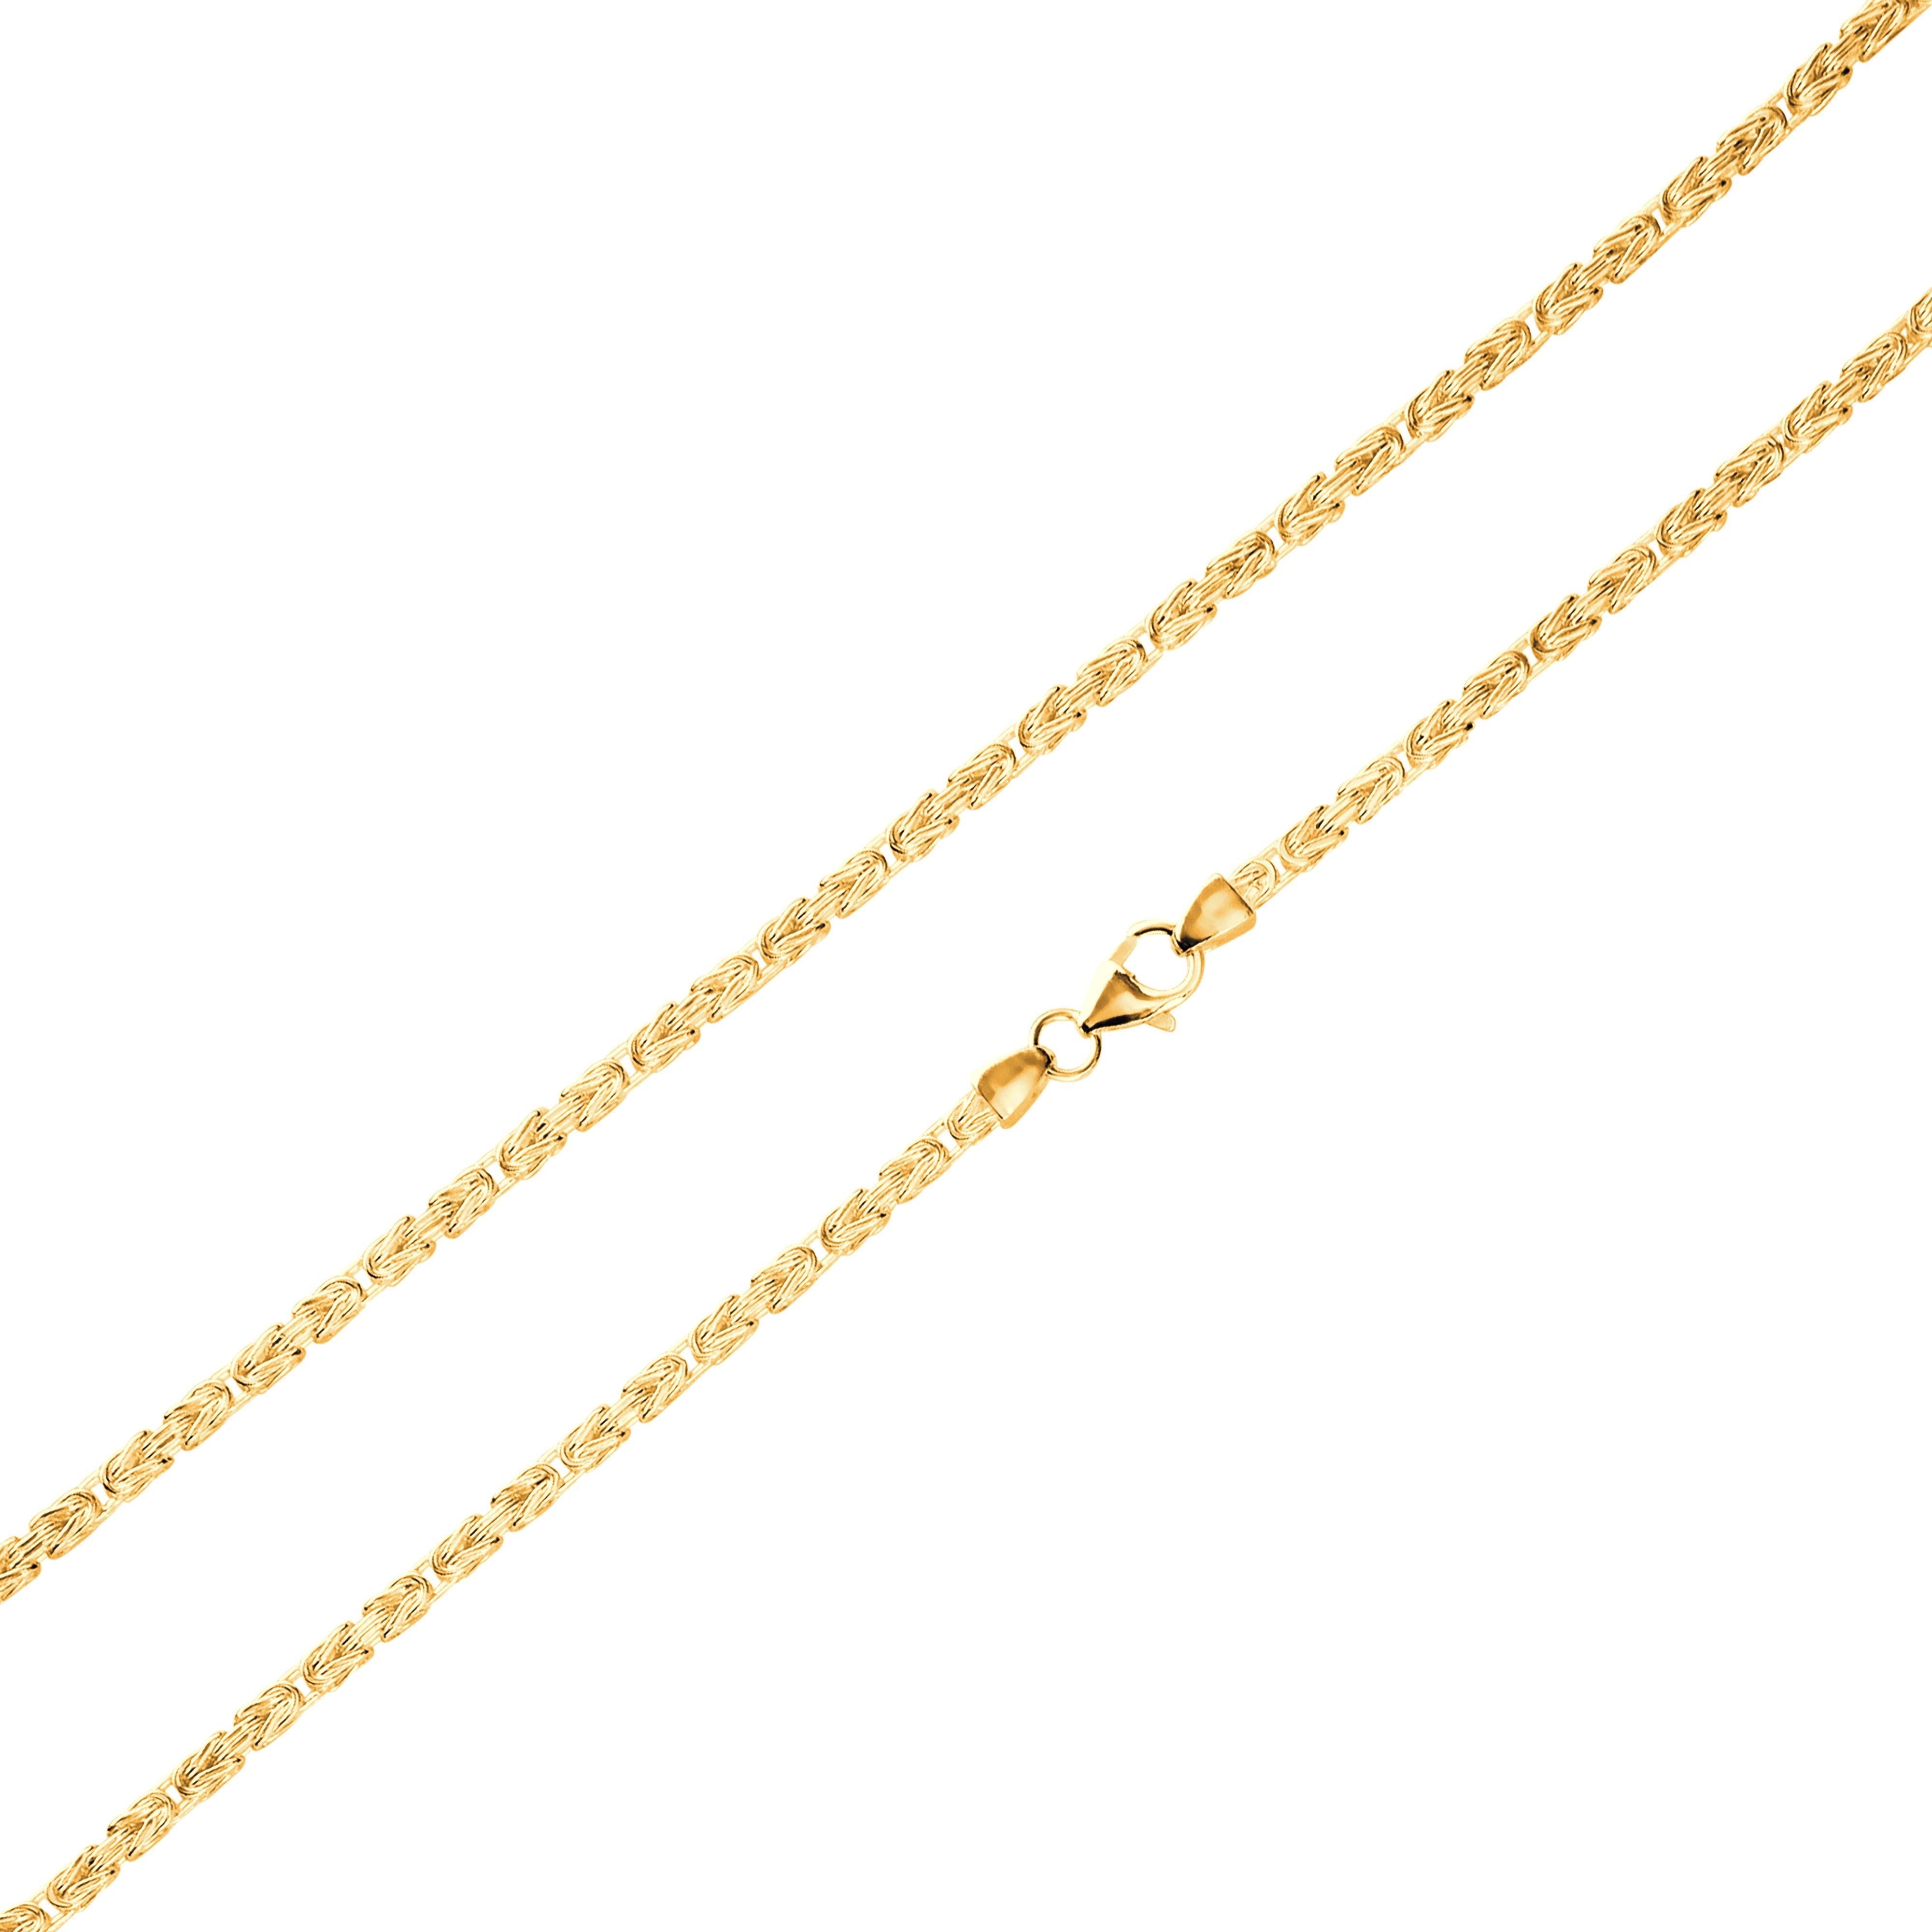 Byzantine chain 3.2mm wide - 585 gold